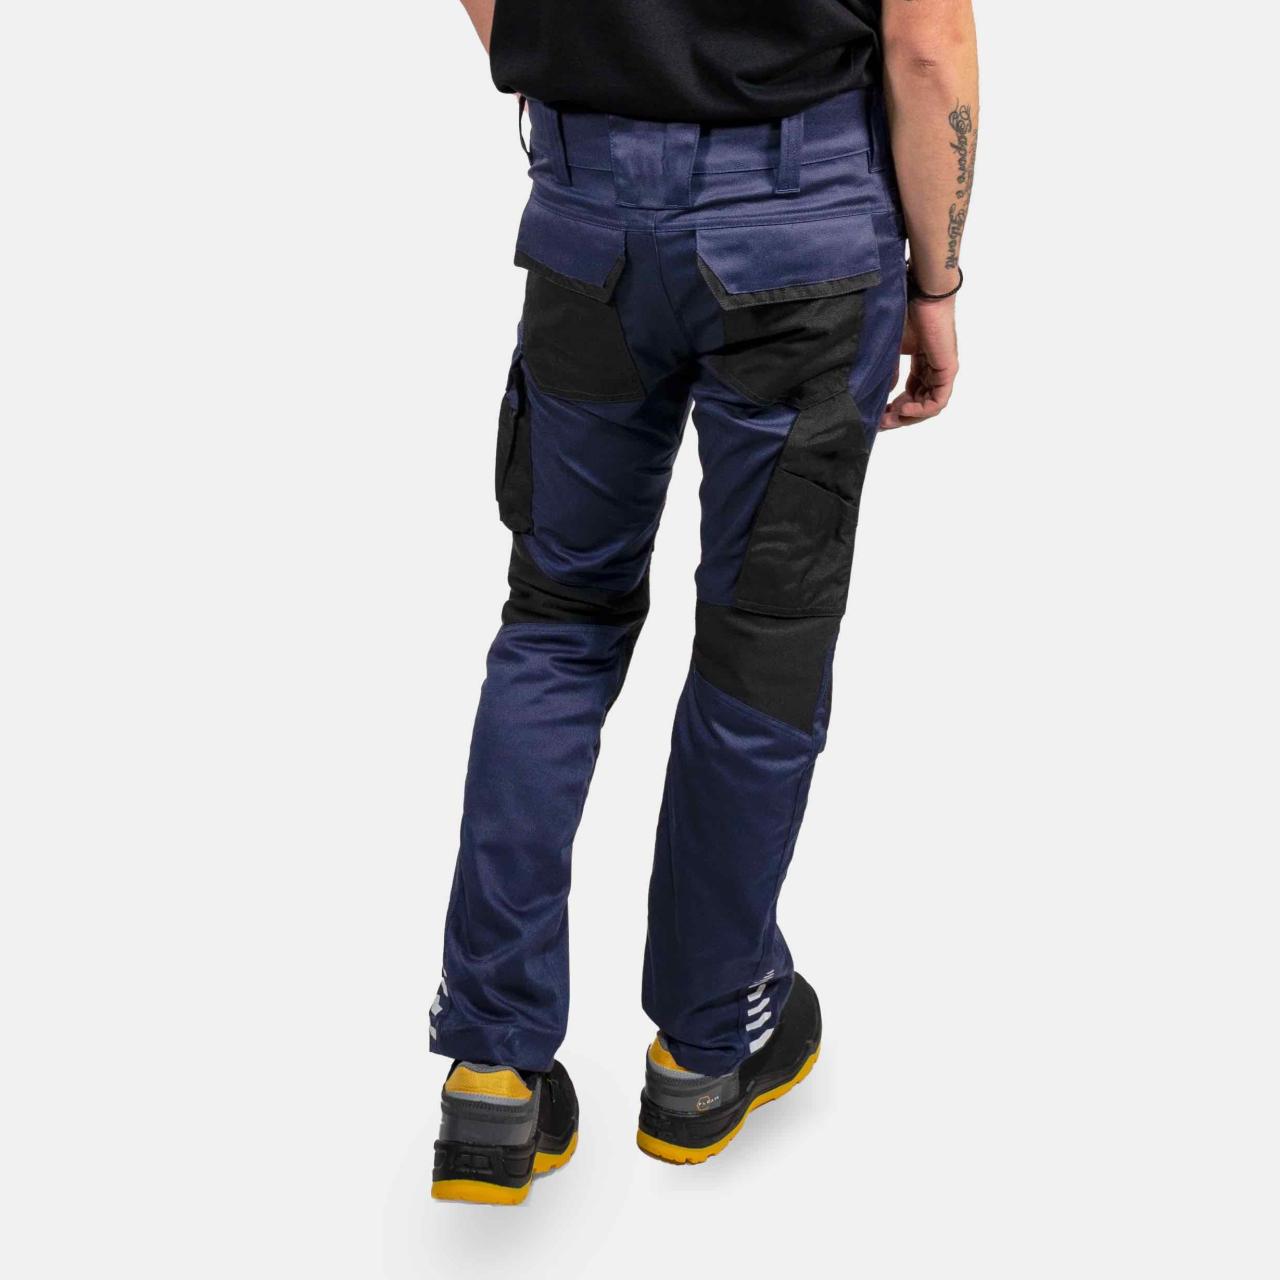 PACIFIC FLEX work trousers blue, open packaging, 54